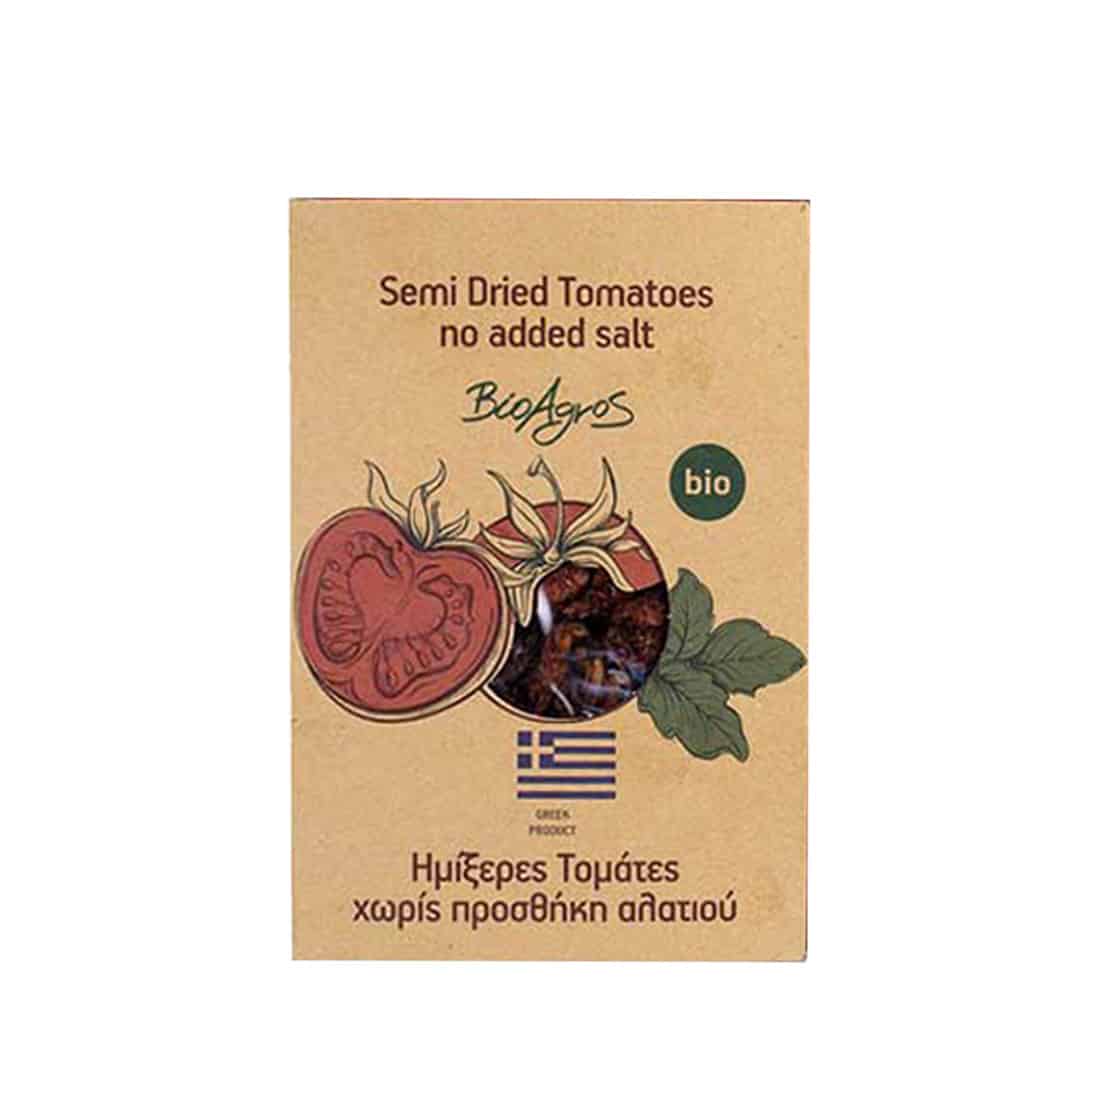 semi sundried tomato bioagros